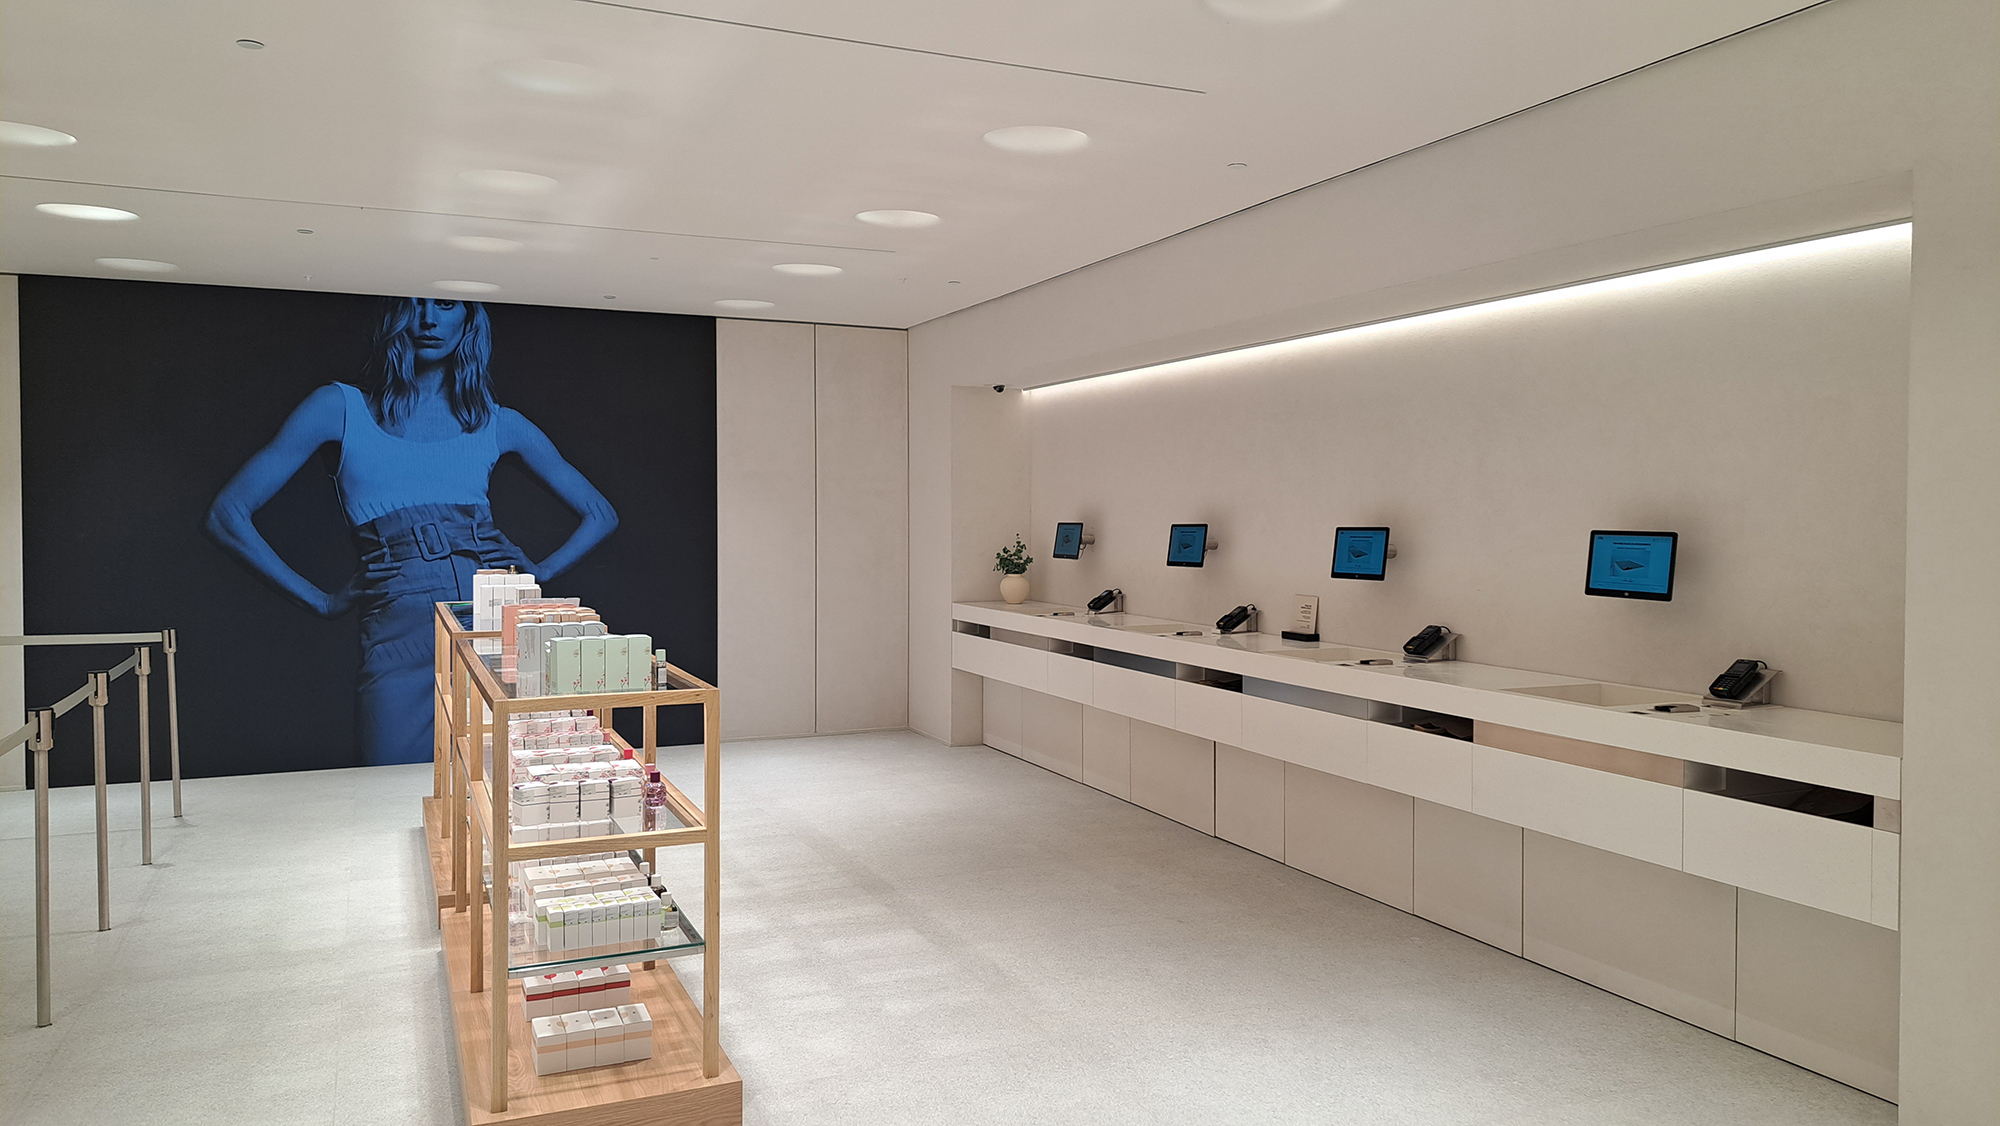 Zara inaugura nova loja com conceito tecnológico